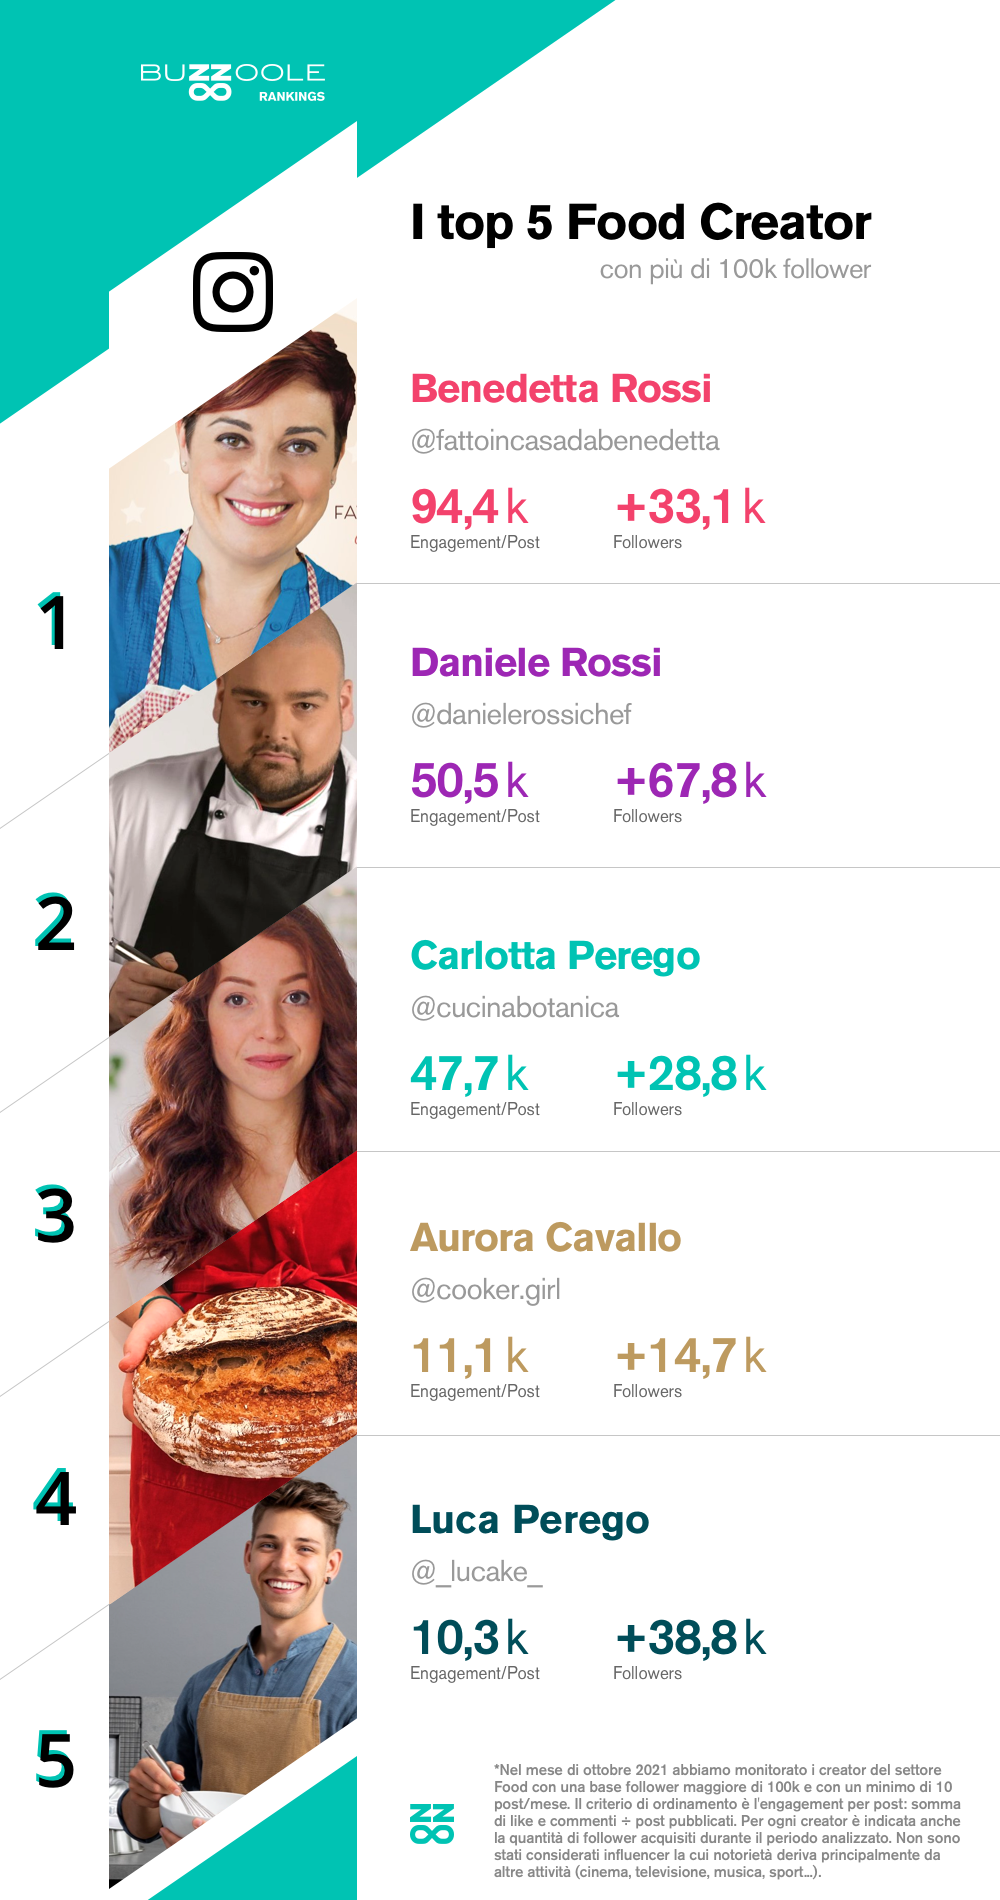 Classifica Top food influencer italiani su instagram:
1° @fattoincasadabenedetta
2° @danielerossichef
3° @cucinabotanica
4° @cooker.girl
5° @_lucake_